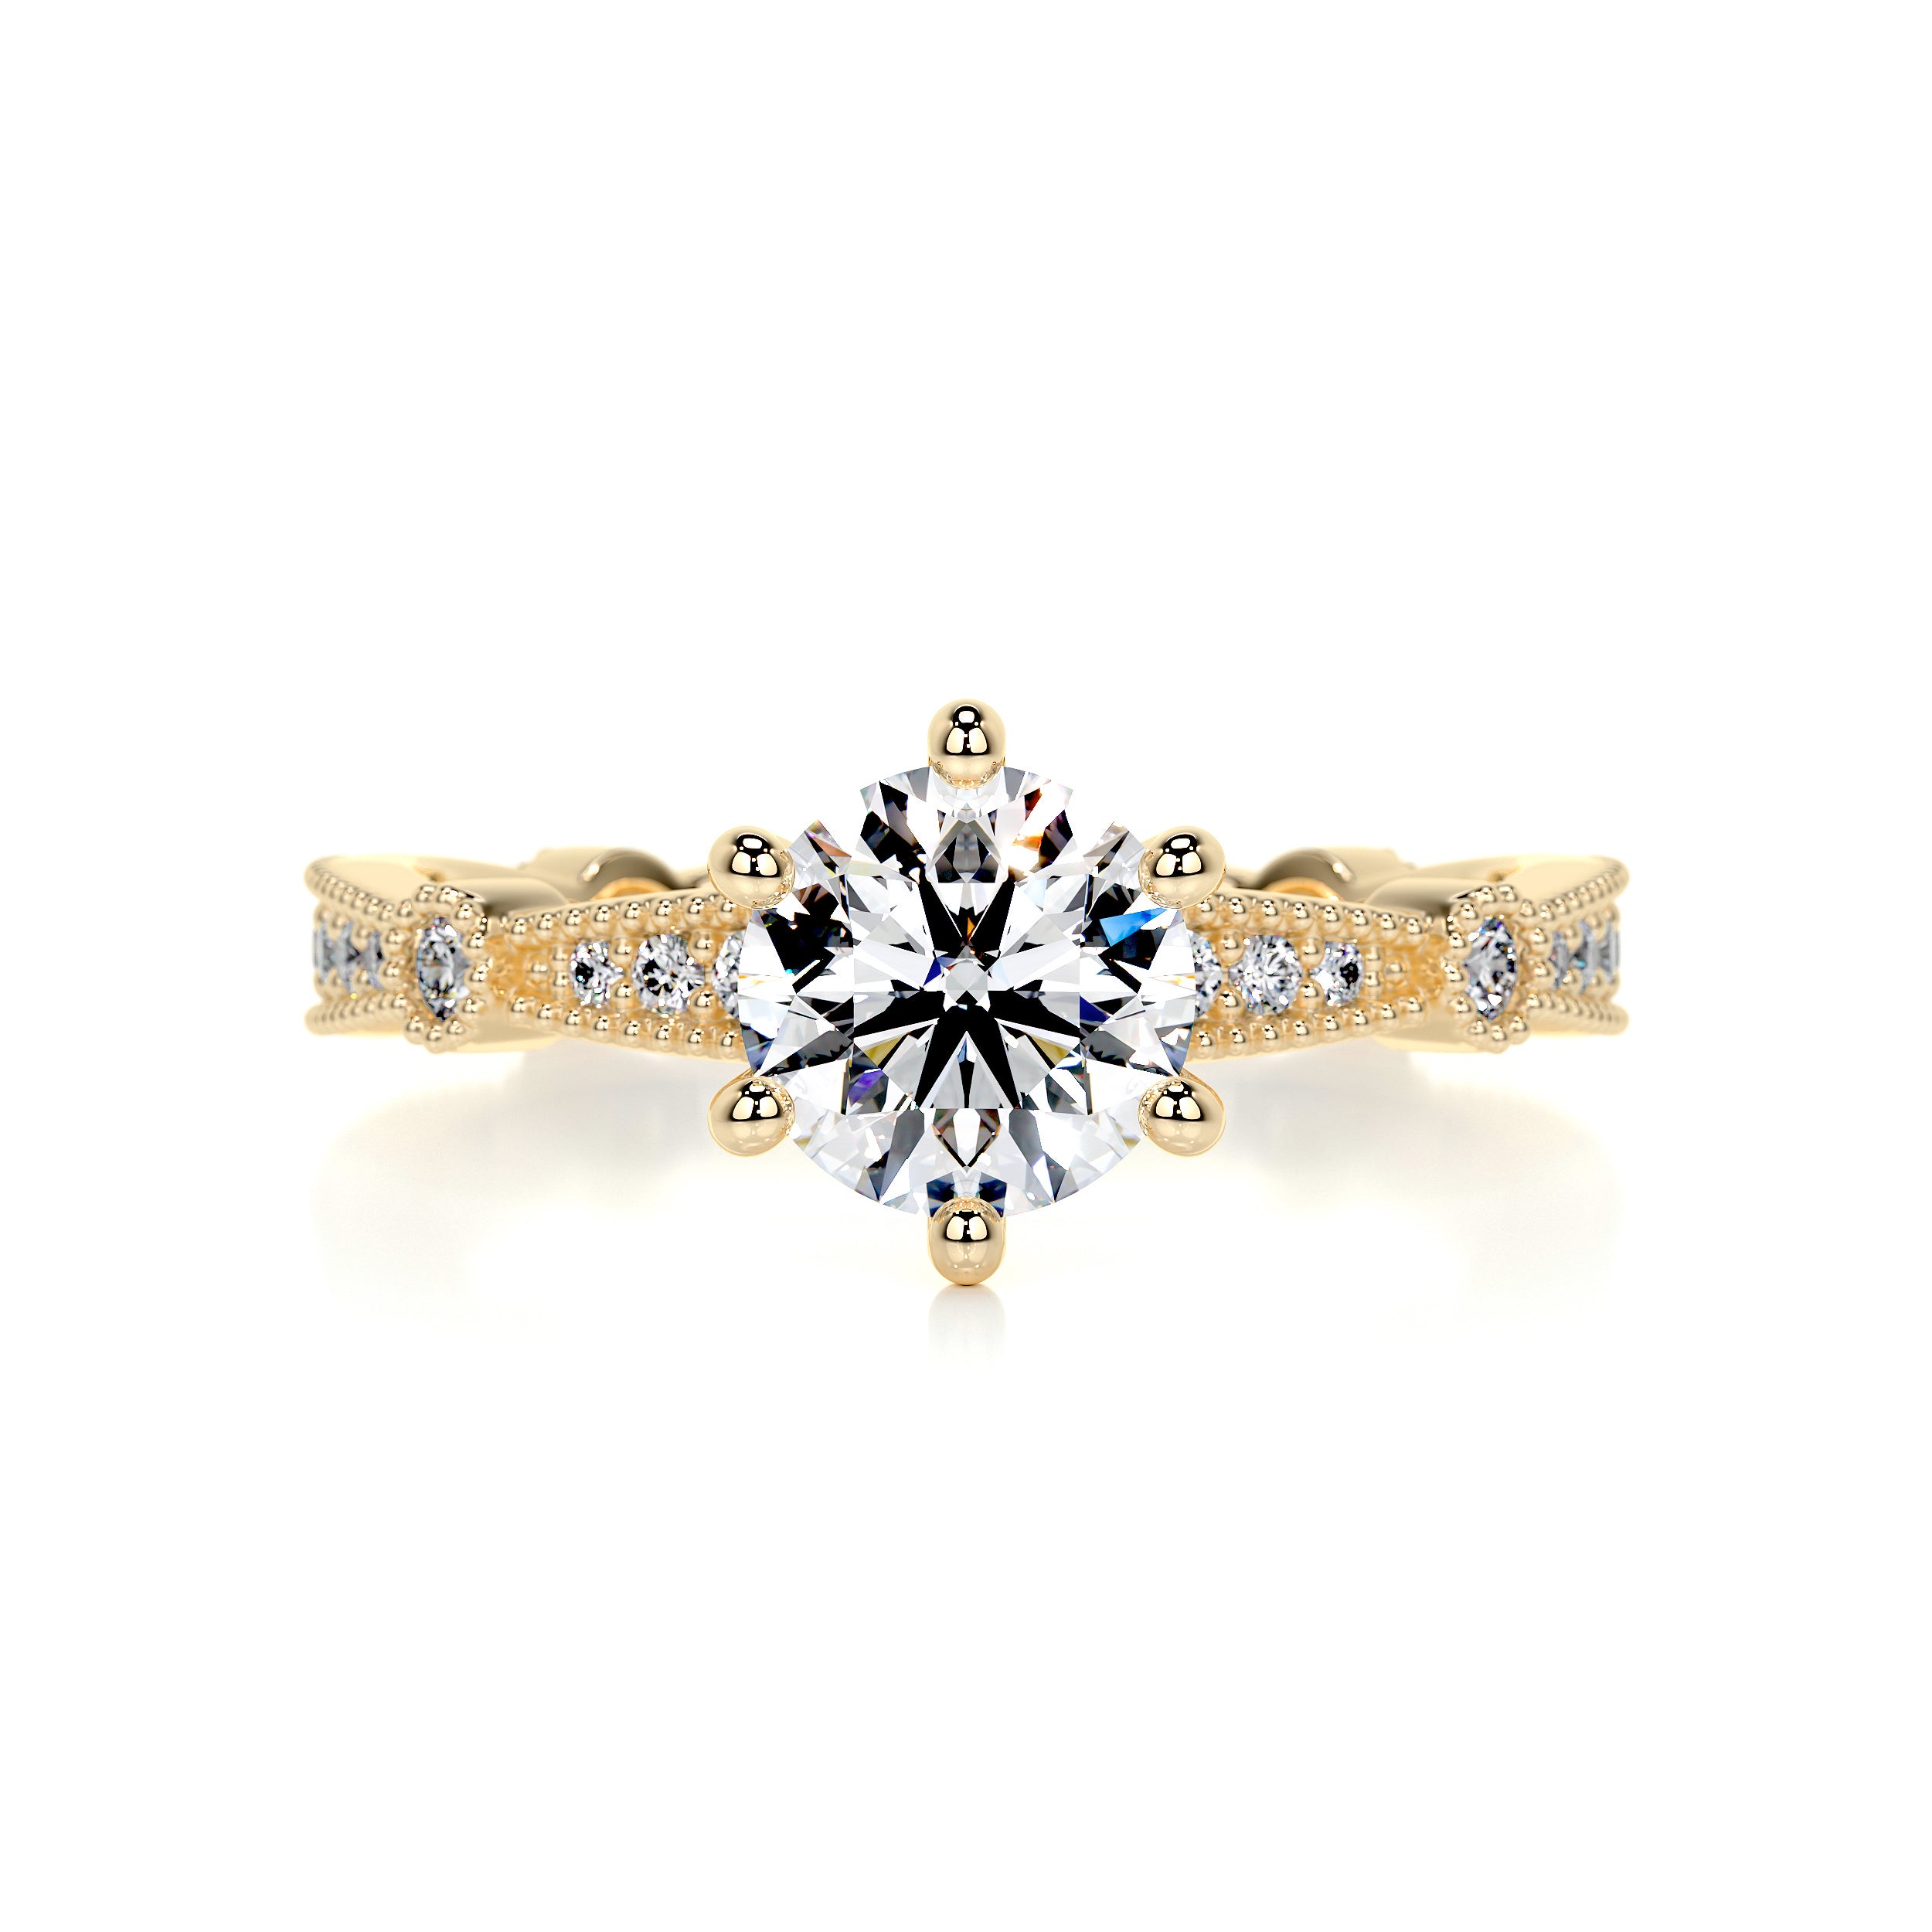 Stacy Moissanite & Diamonds Ring   (1.30 Carat) -18K Yellow Gold